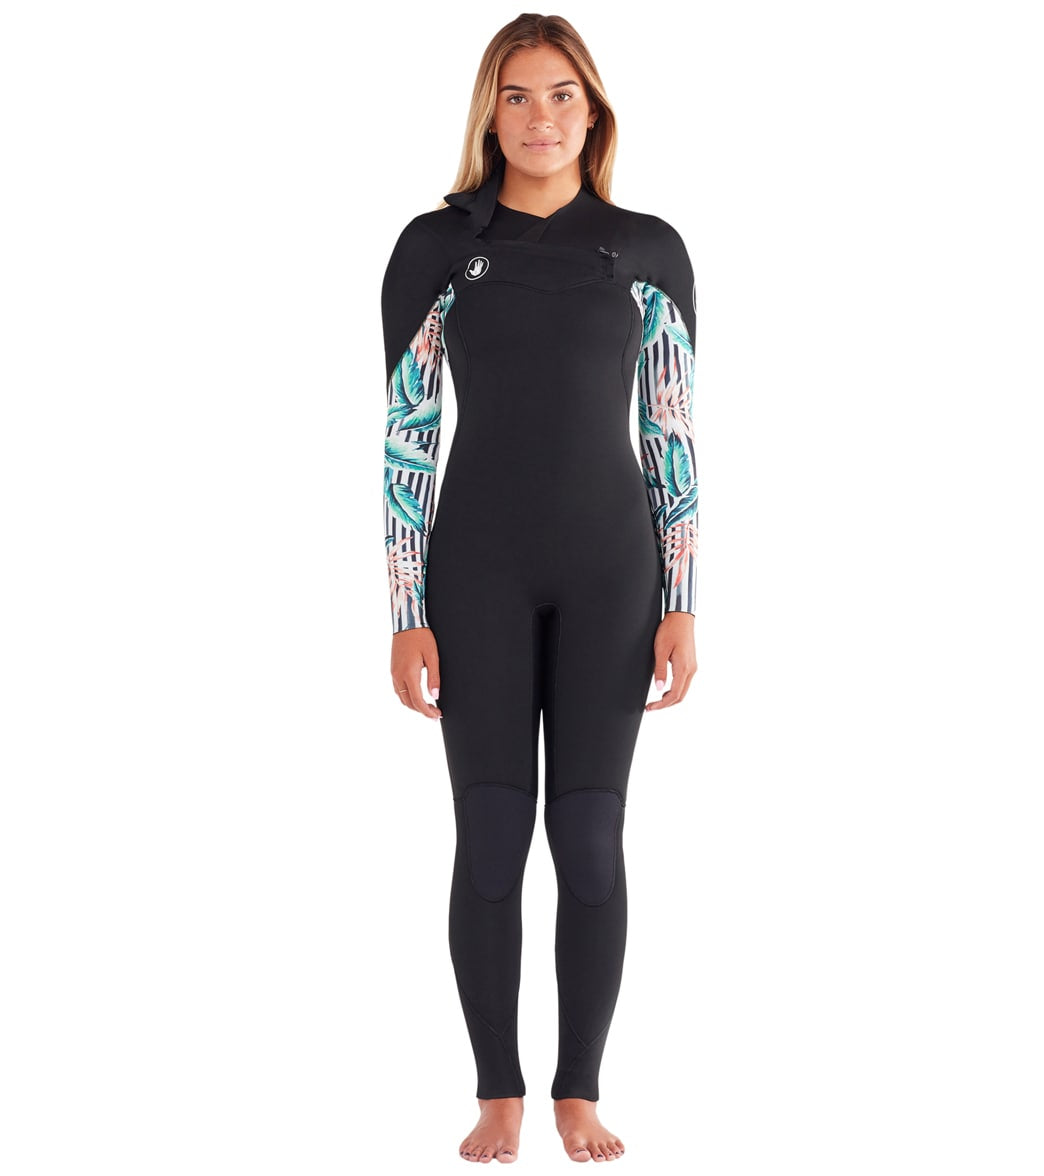 Body Glove Women's 4/3mm Stellar Chest Zip Full Wetsuit at SwimOutlet.com